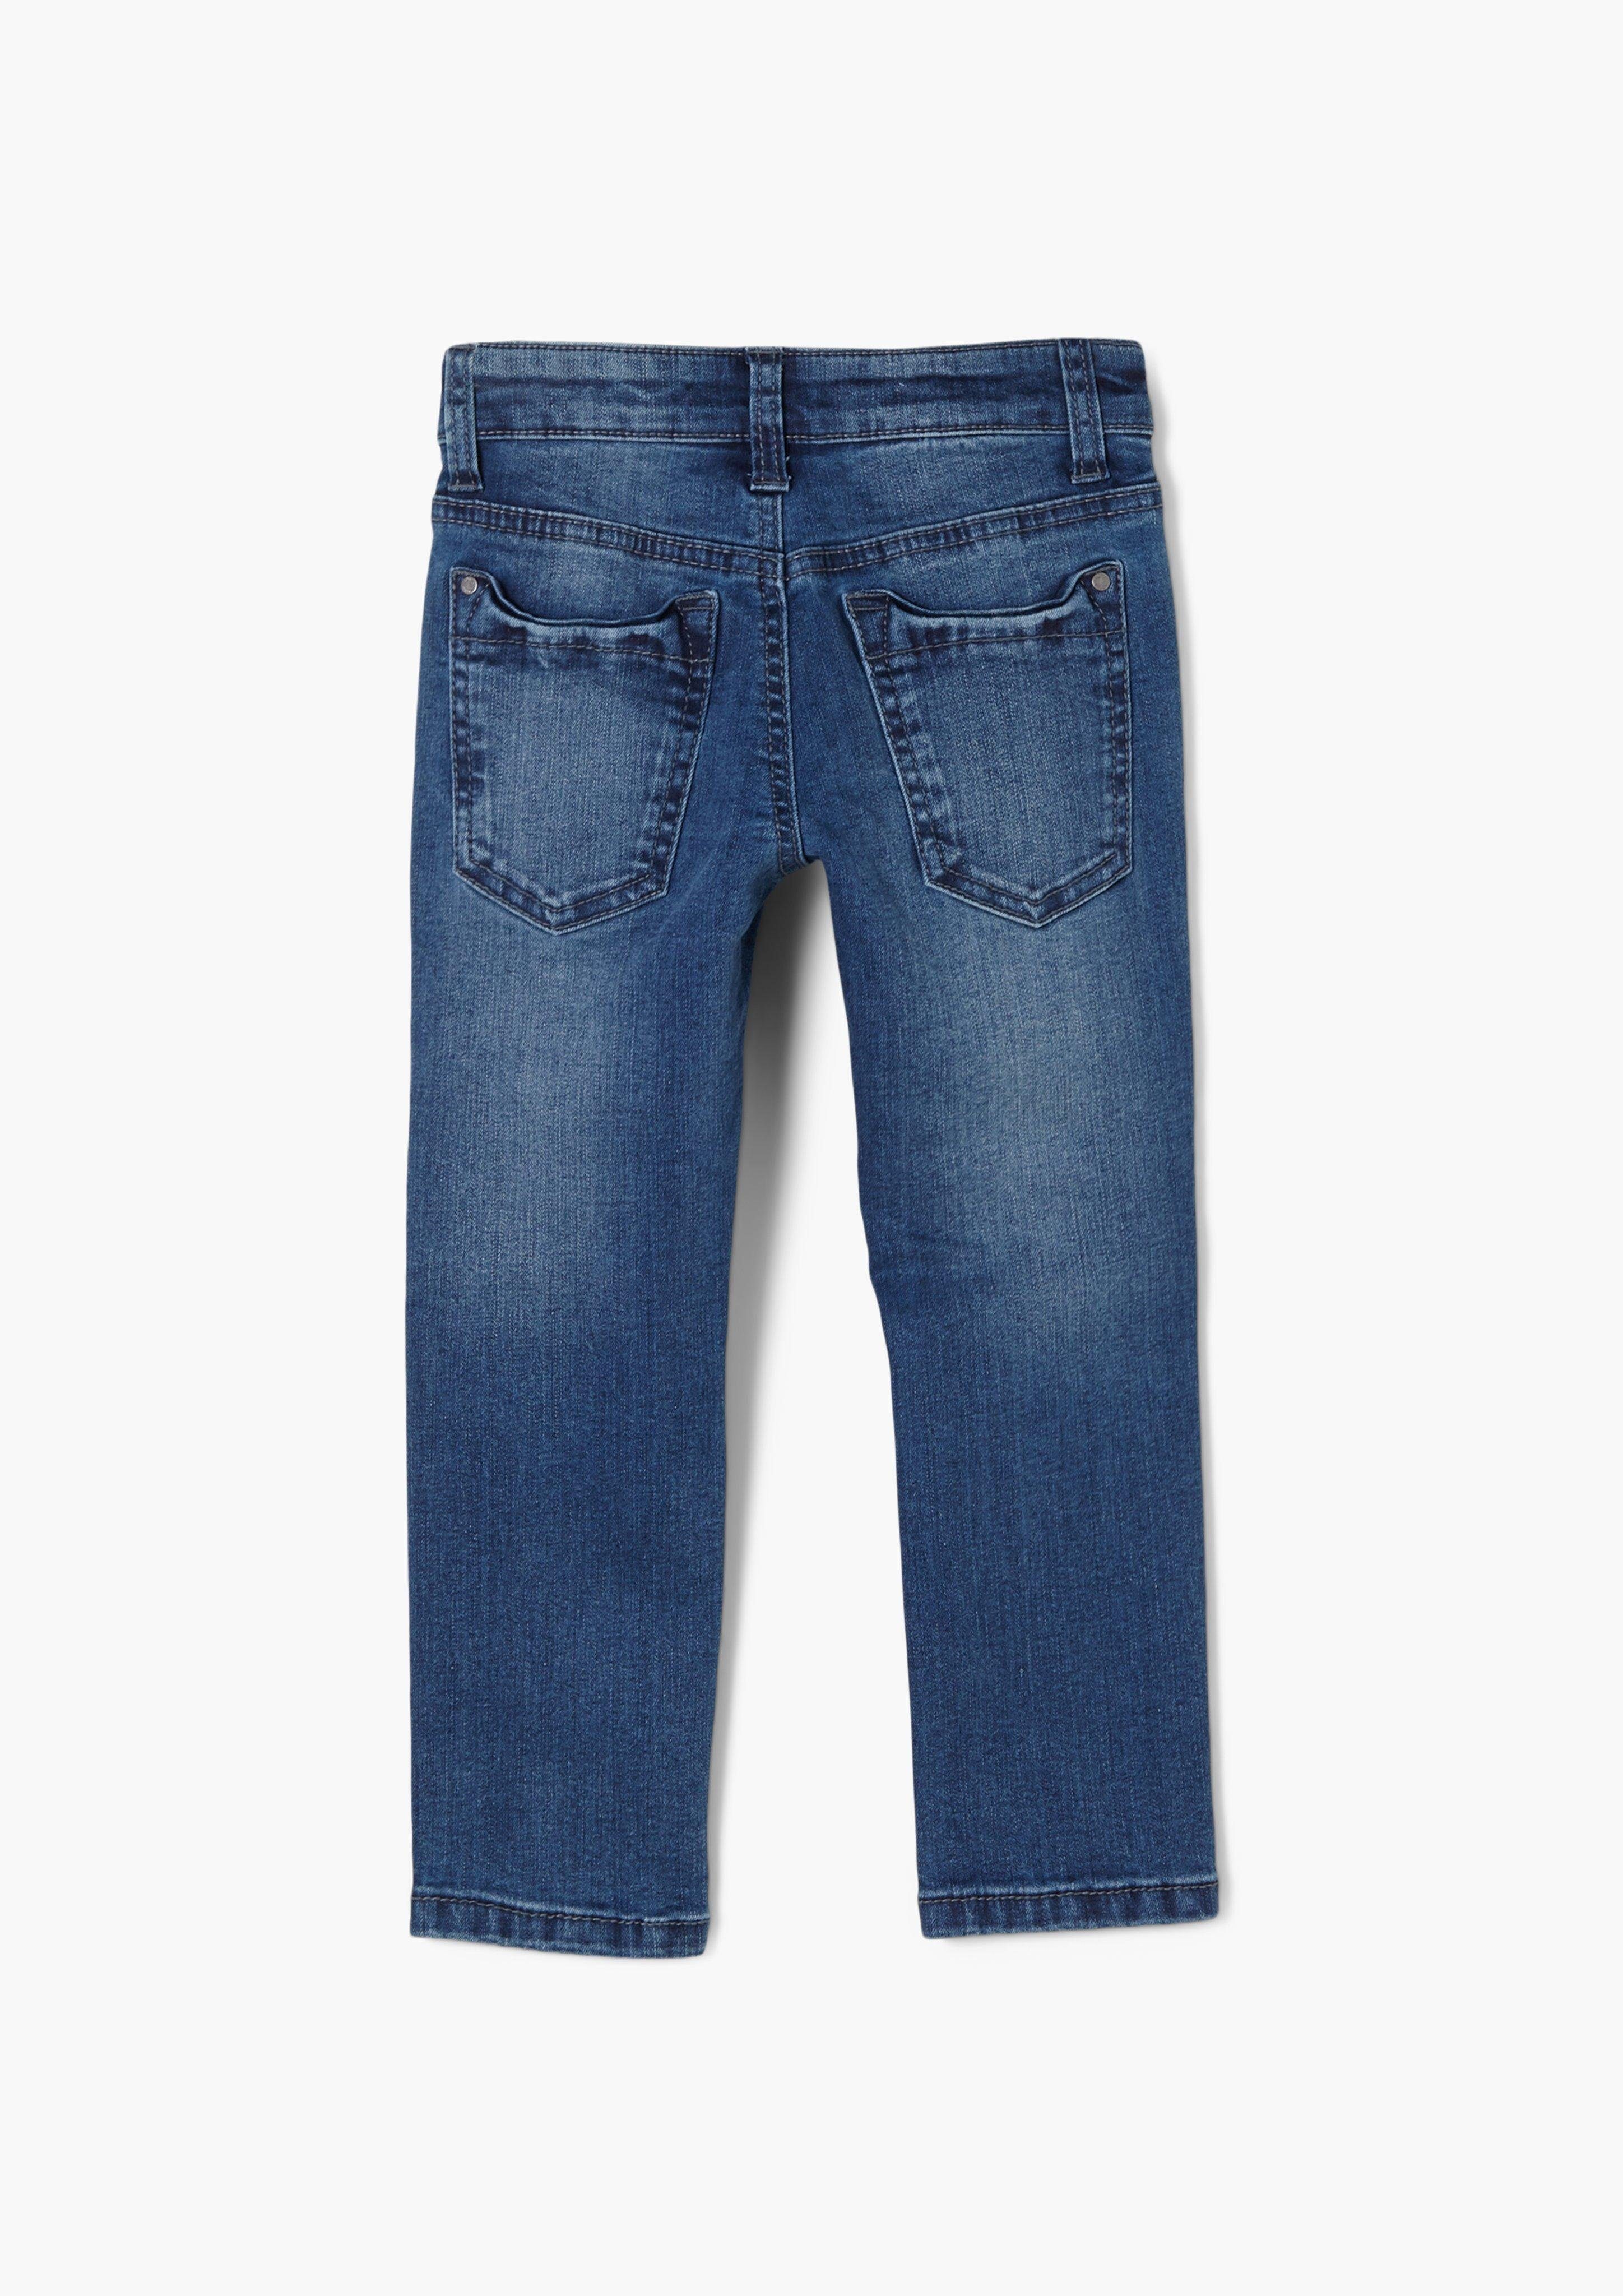 Jeans Slim Rise / / 5-Pocket-Jeans Brad Fit s.Oliver Waschung Leg Mid / Slim